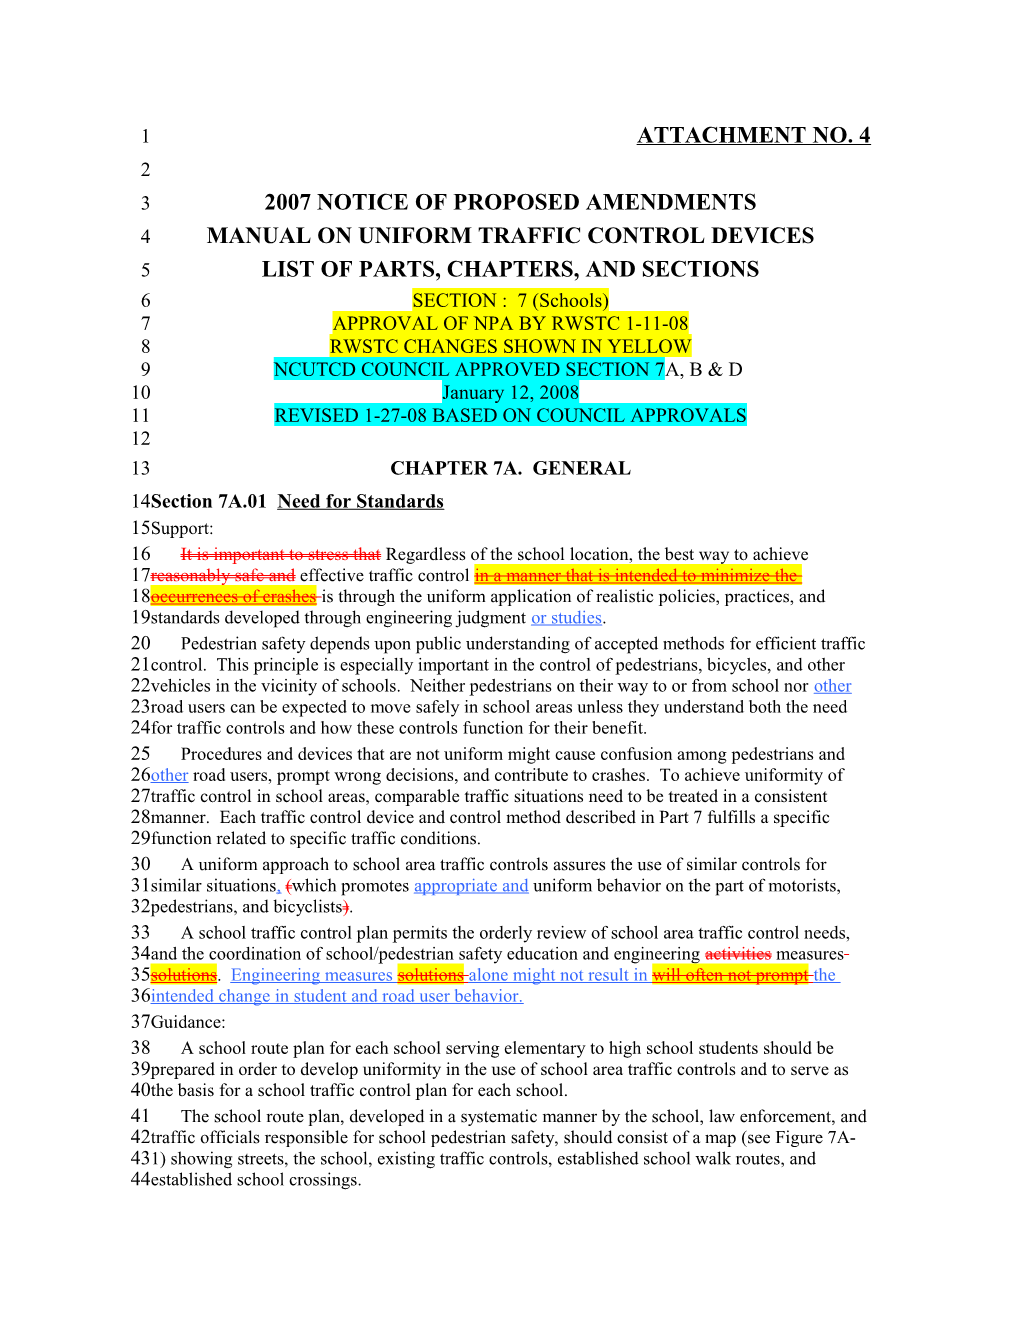 2007 Notice of Proposed Amendments